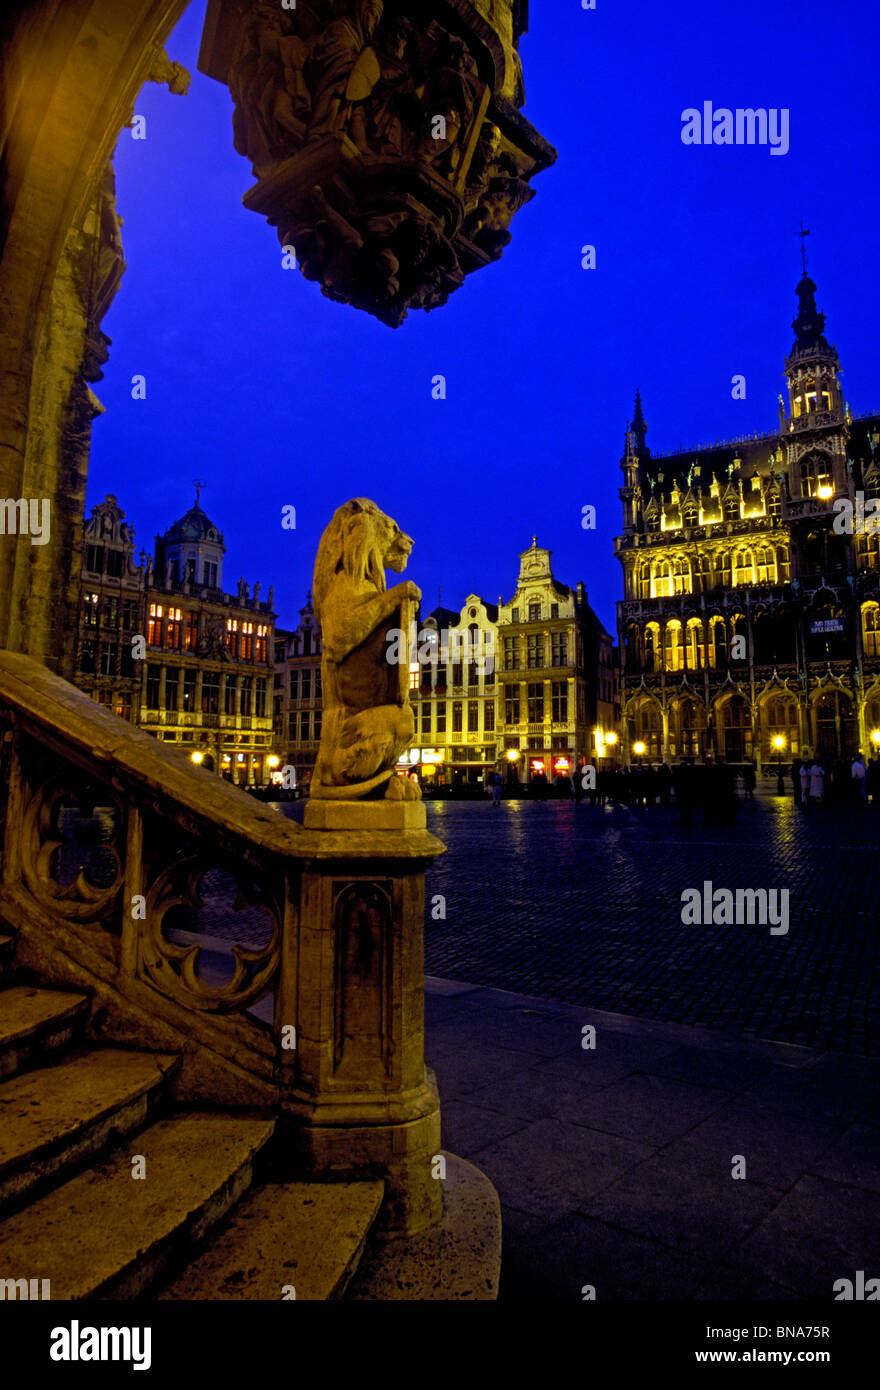 King's House, Maison du Roi, GrandPlace, Grand Place, city of Brussels, Brussels, Brussels Capital Region, Belgium, Europe Stock Photo